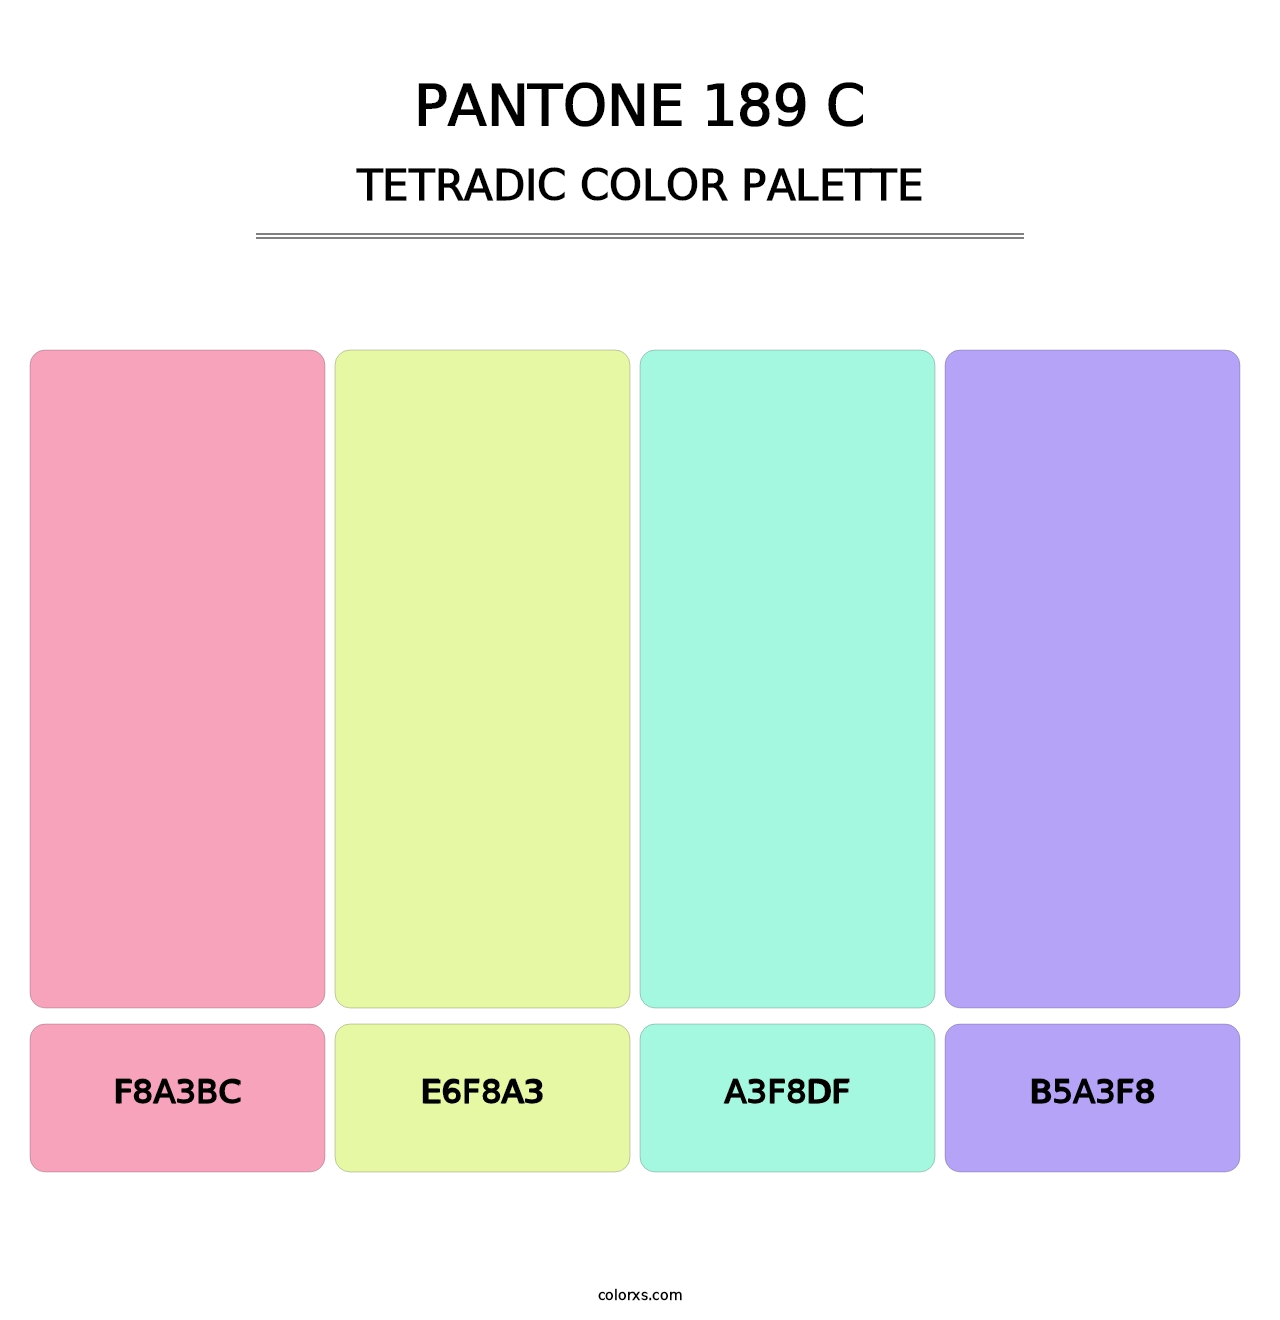 PANTONE 189 C - Tetradic Color Palette